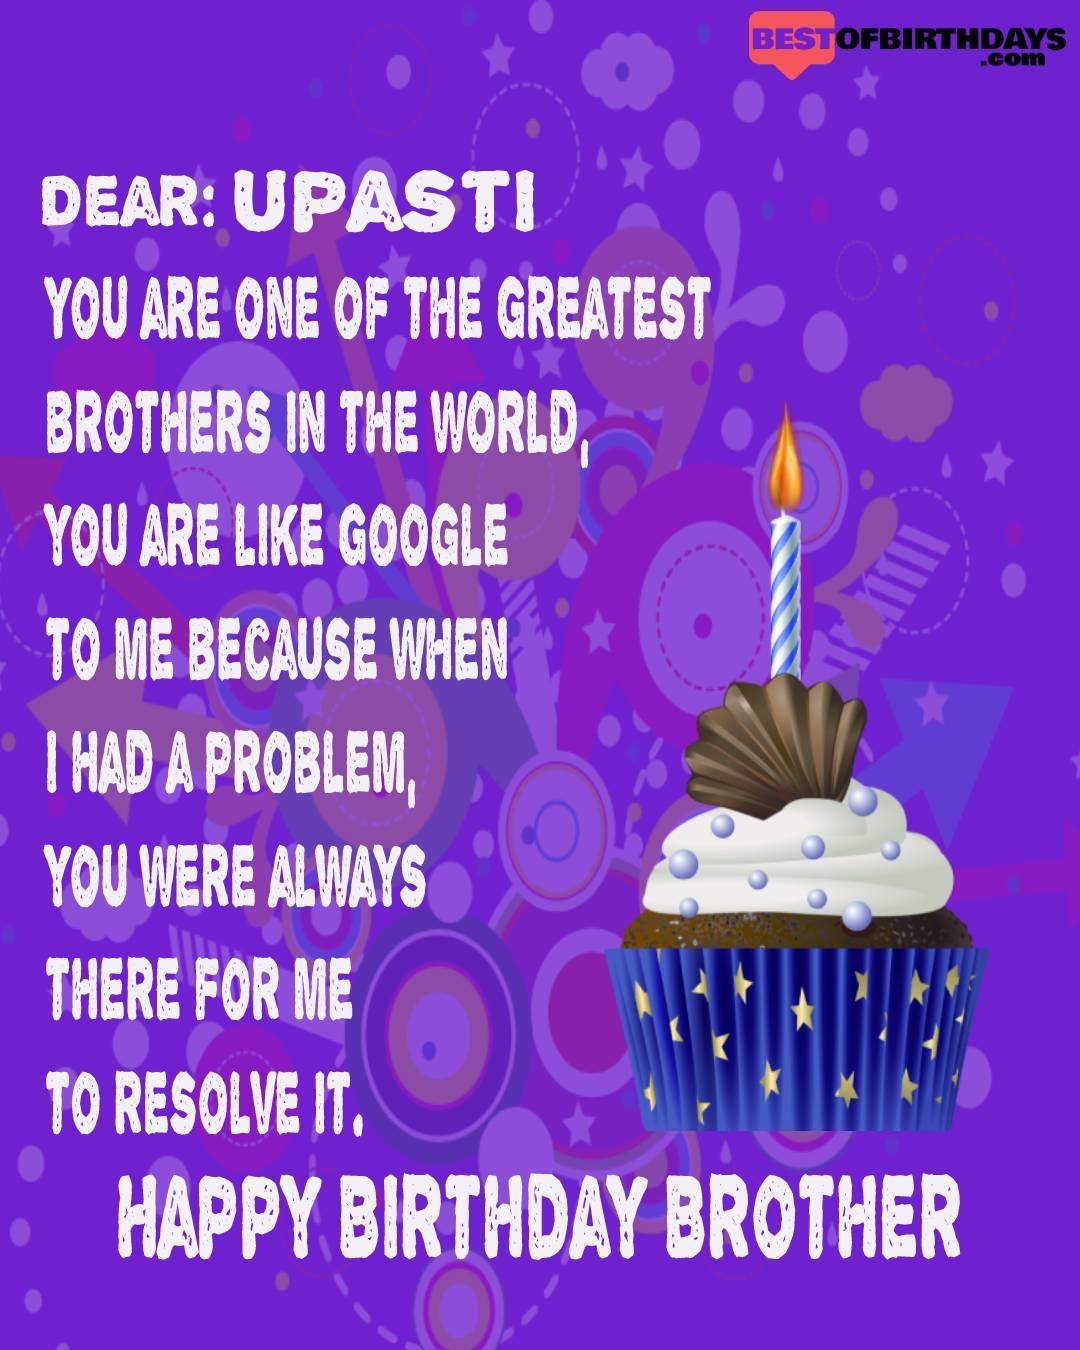 Happy birthday upasti bhai brother bro